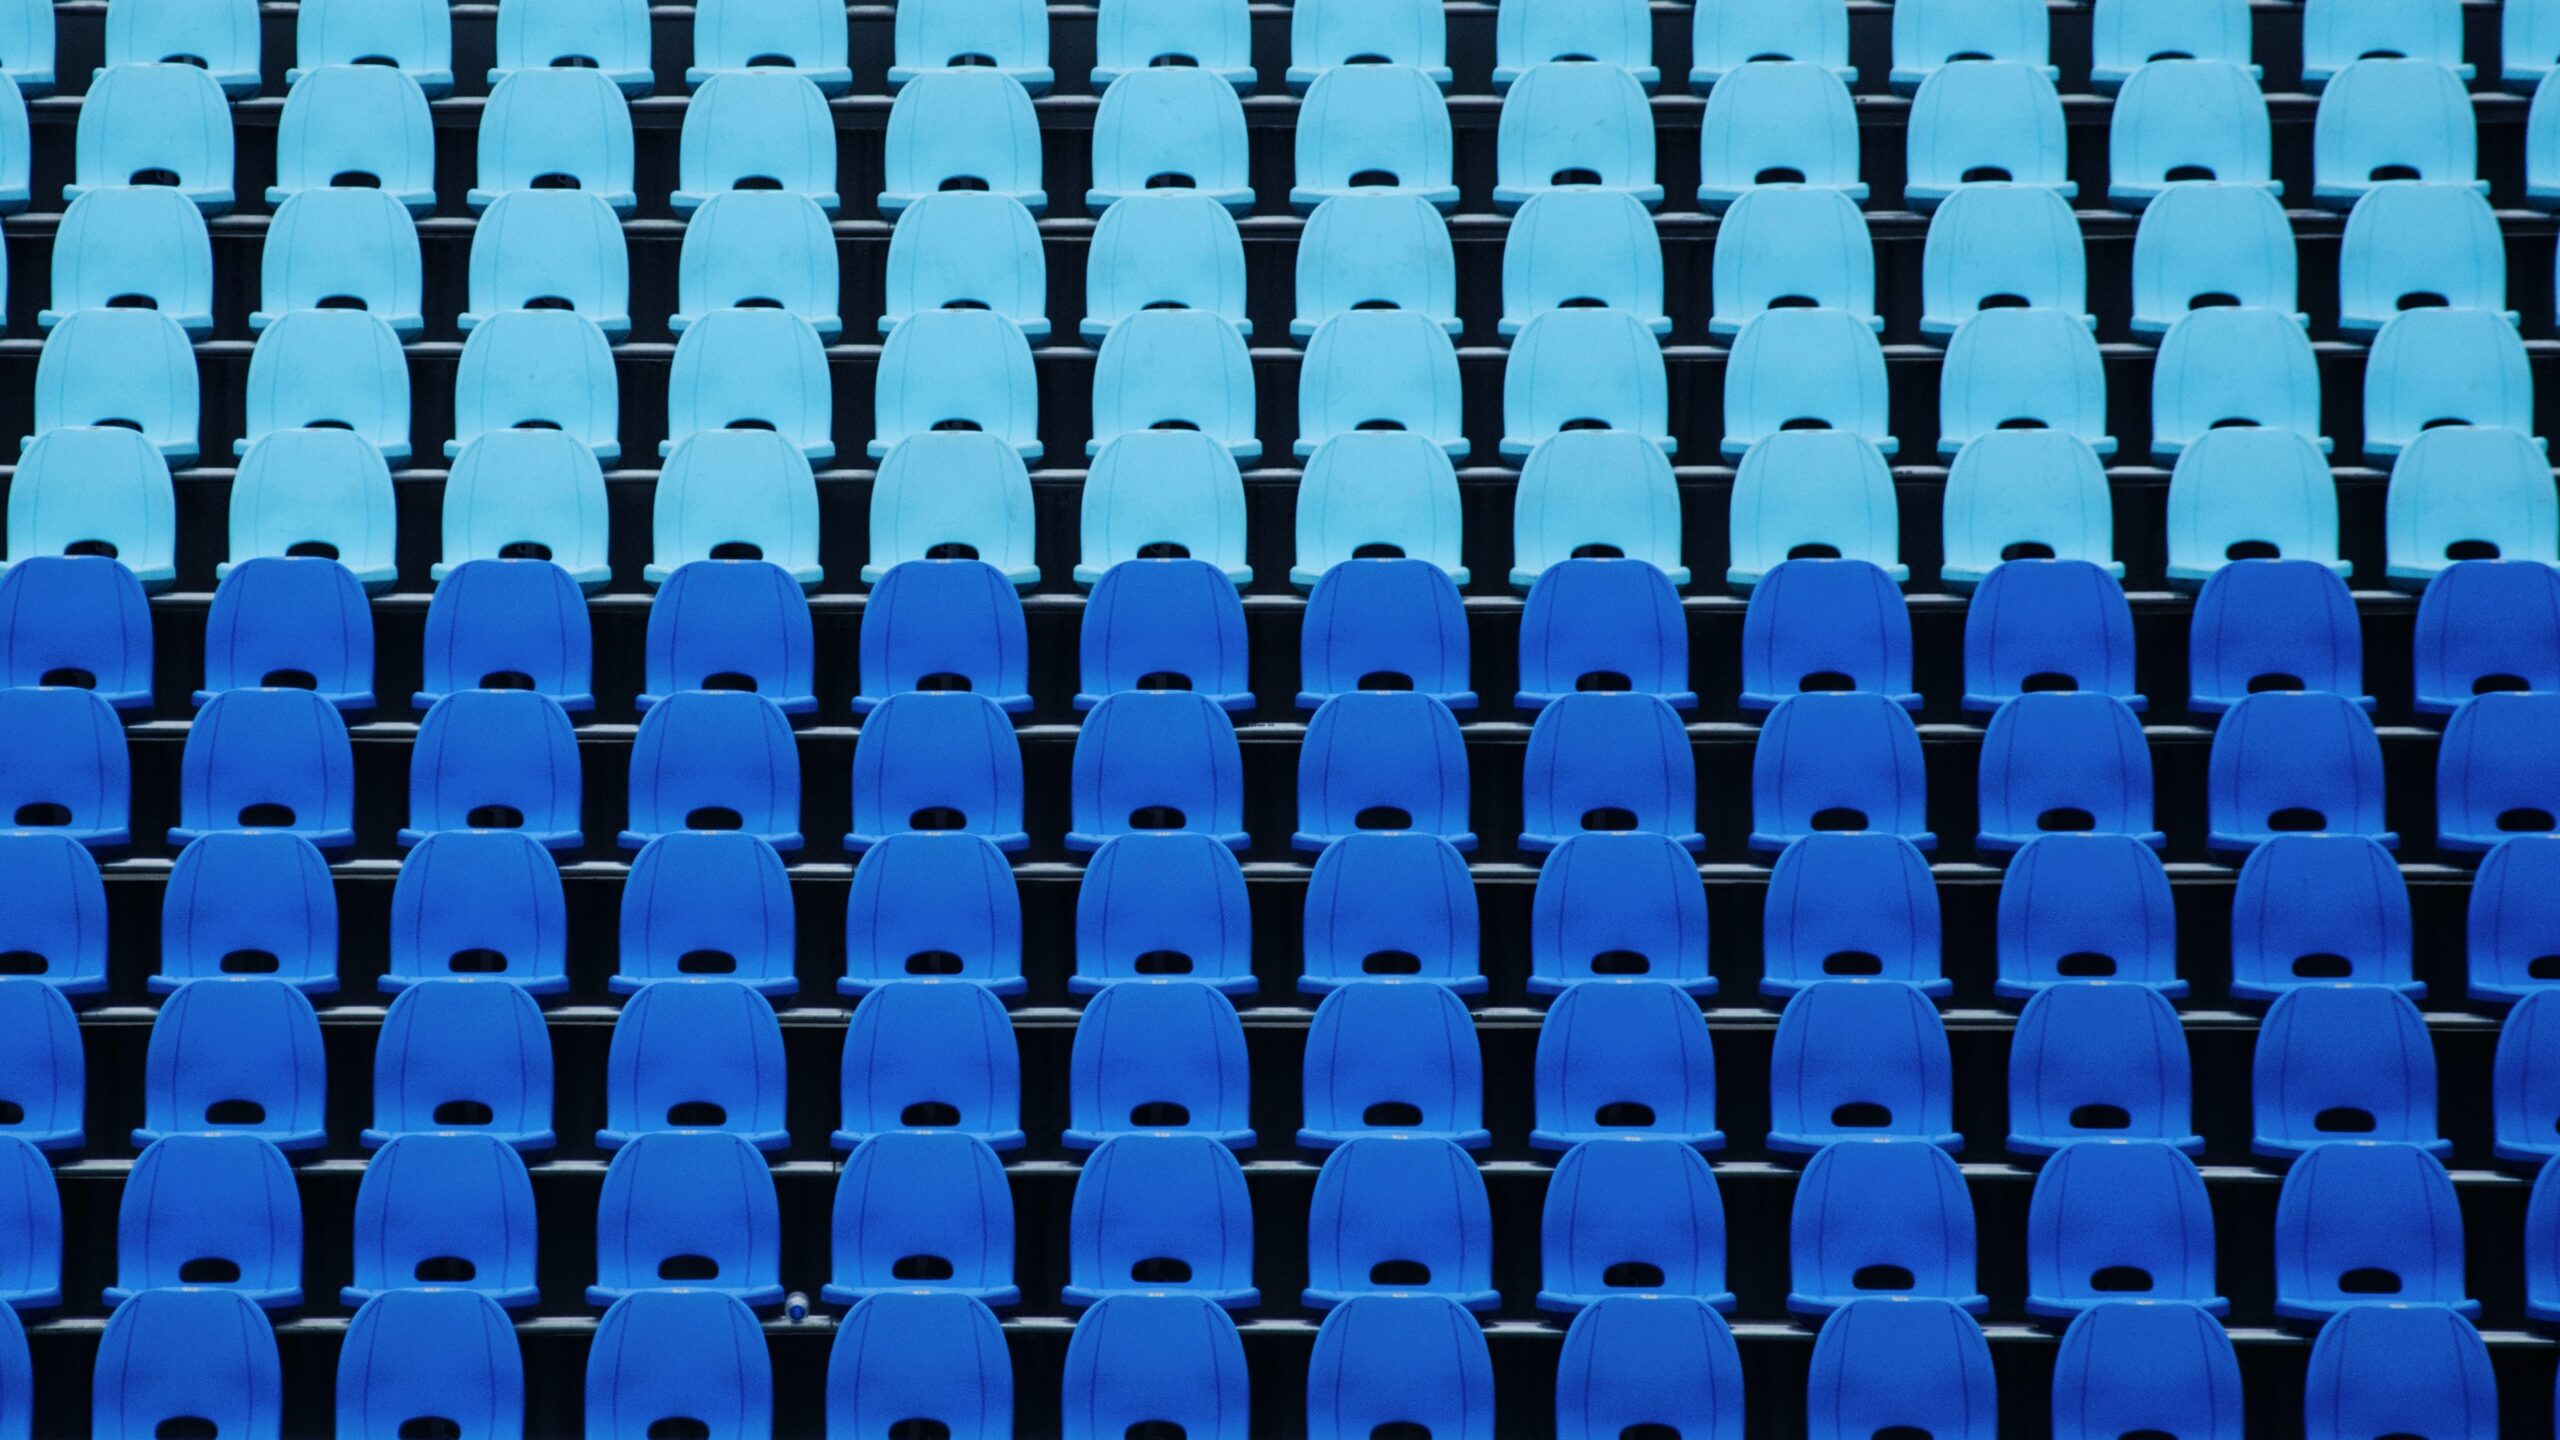 Blue Seats at a Stadium